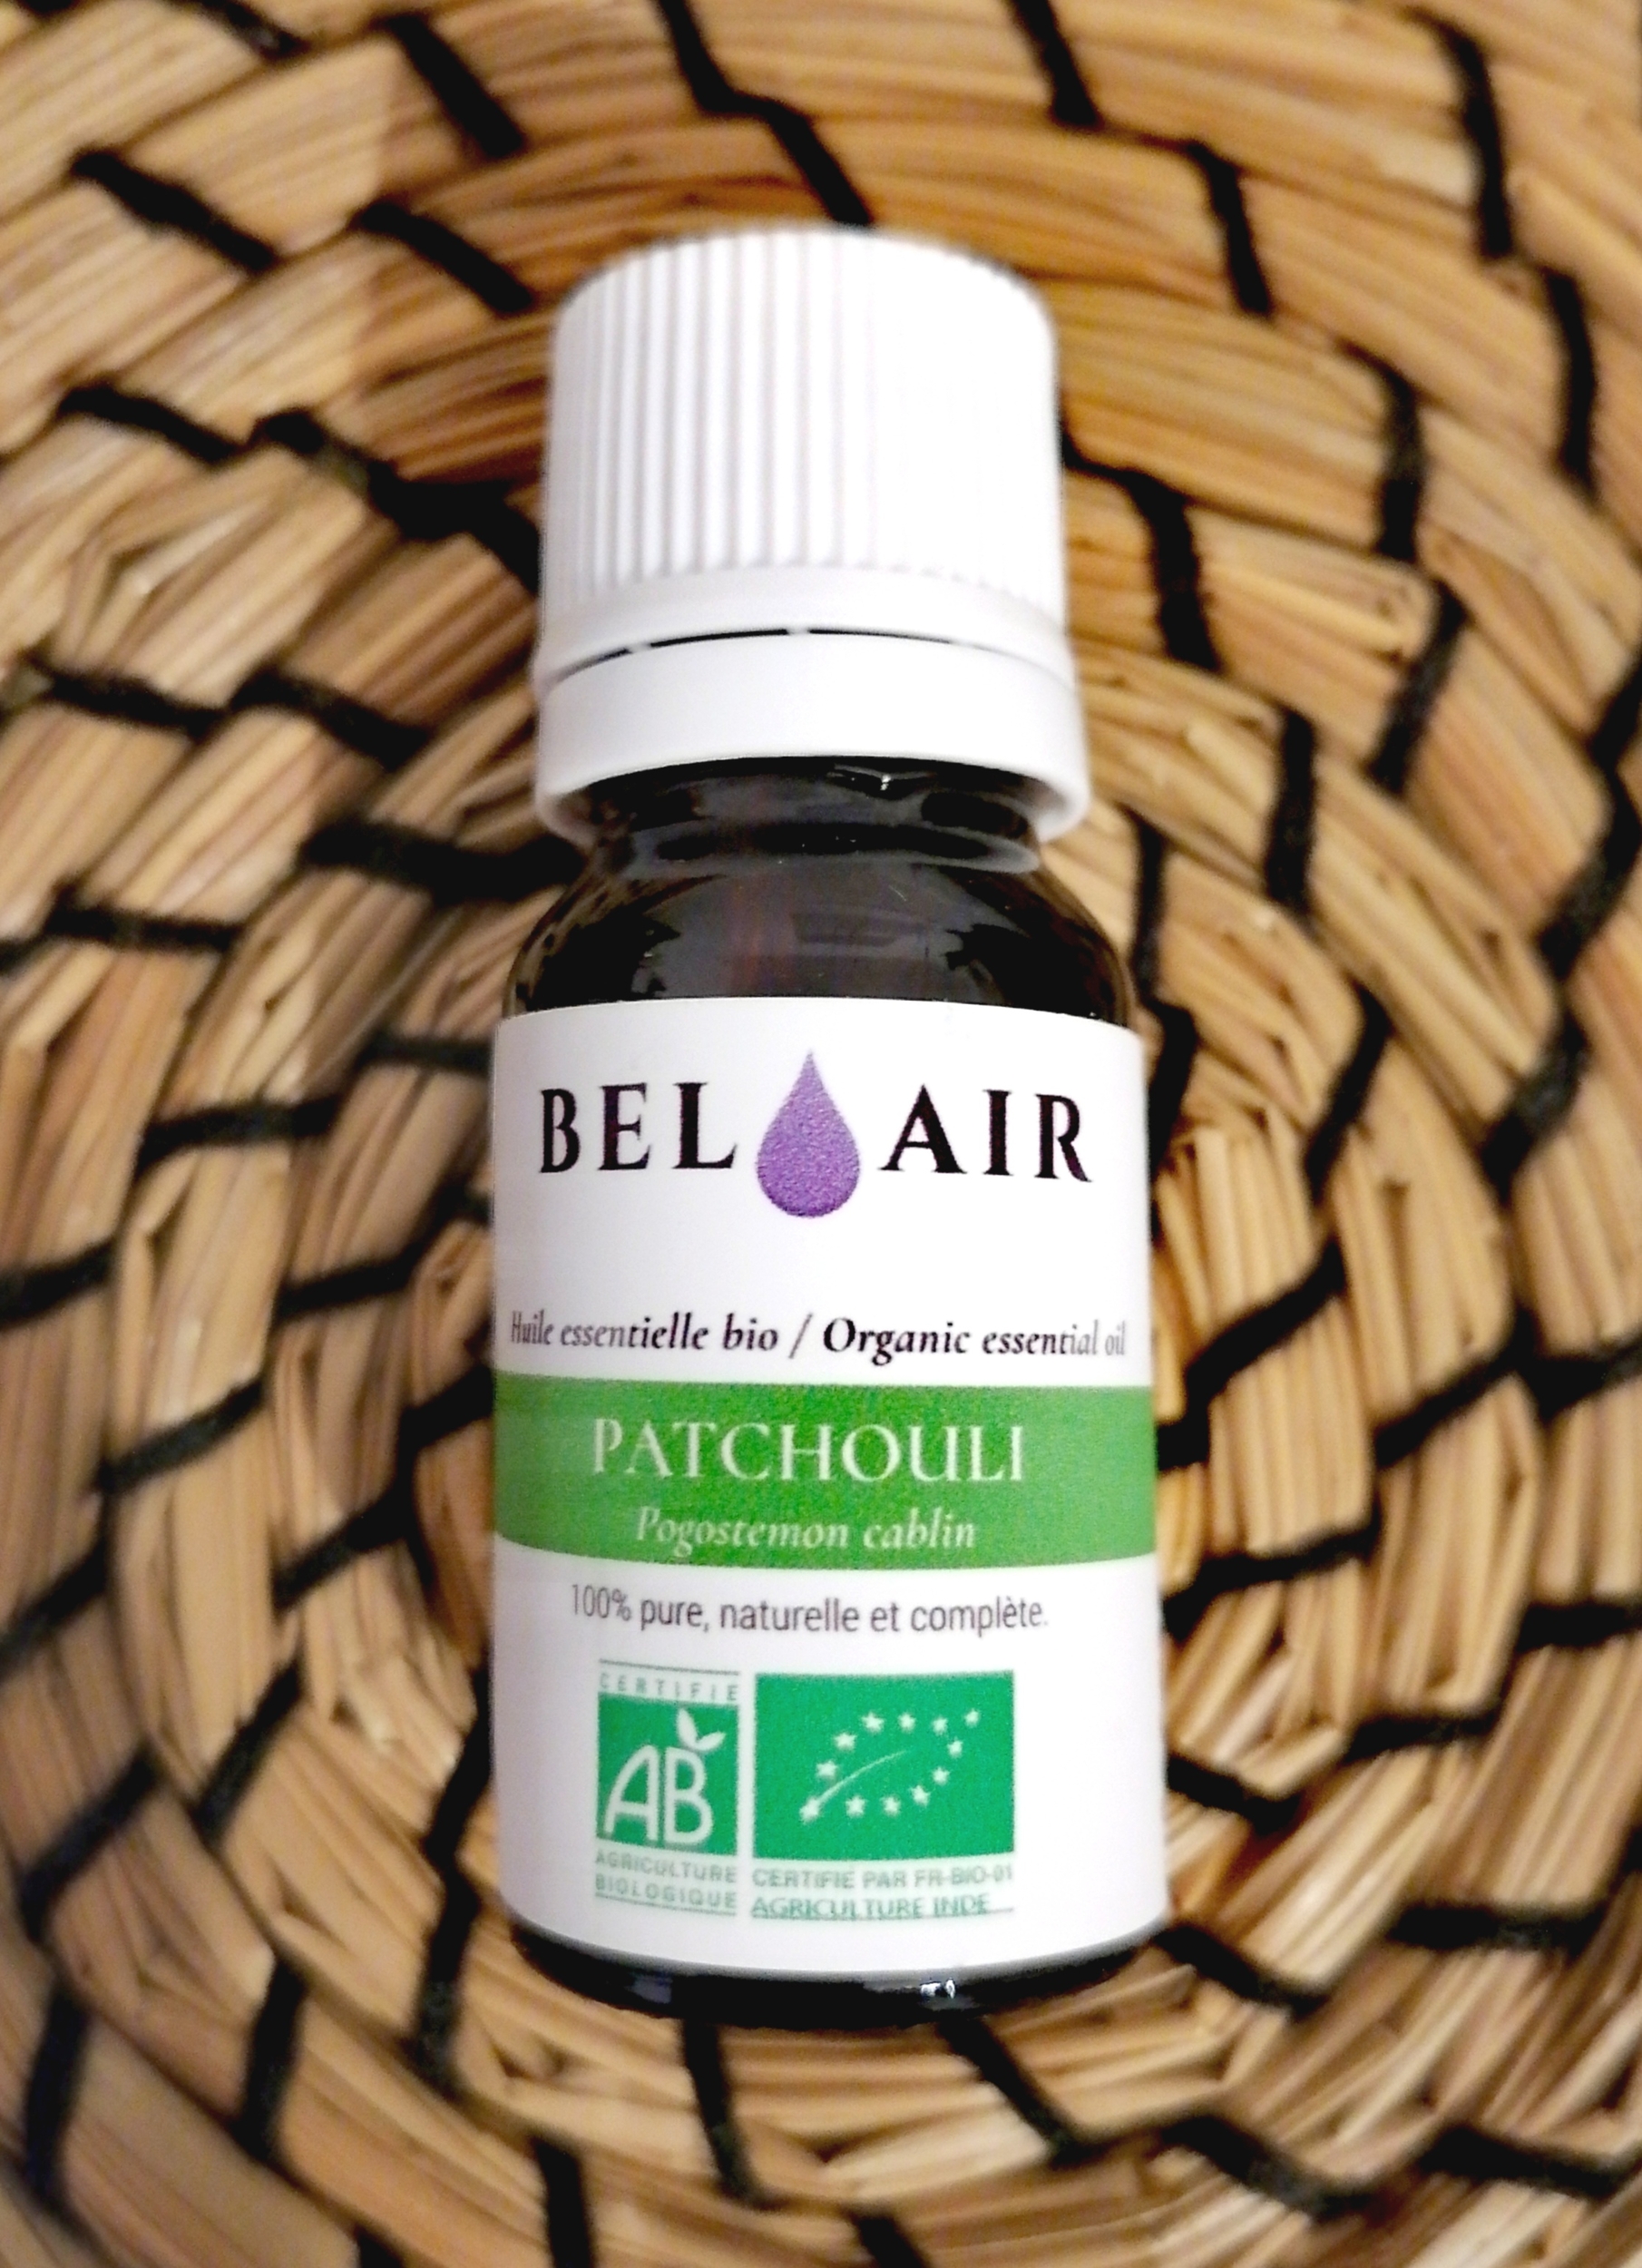 he-Patchouli-huile-essentielle-bel-air-bio-herboristerie